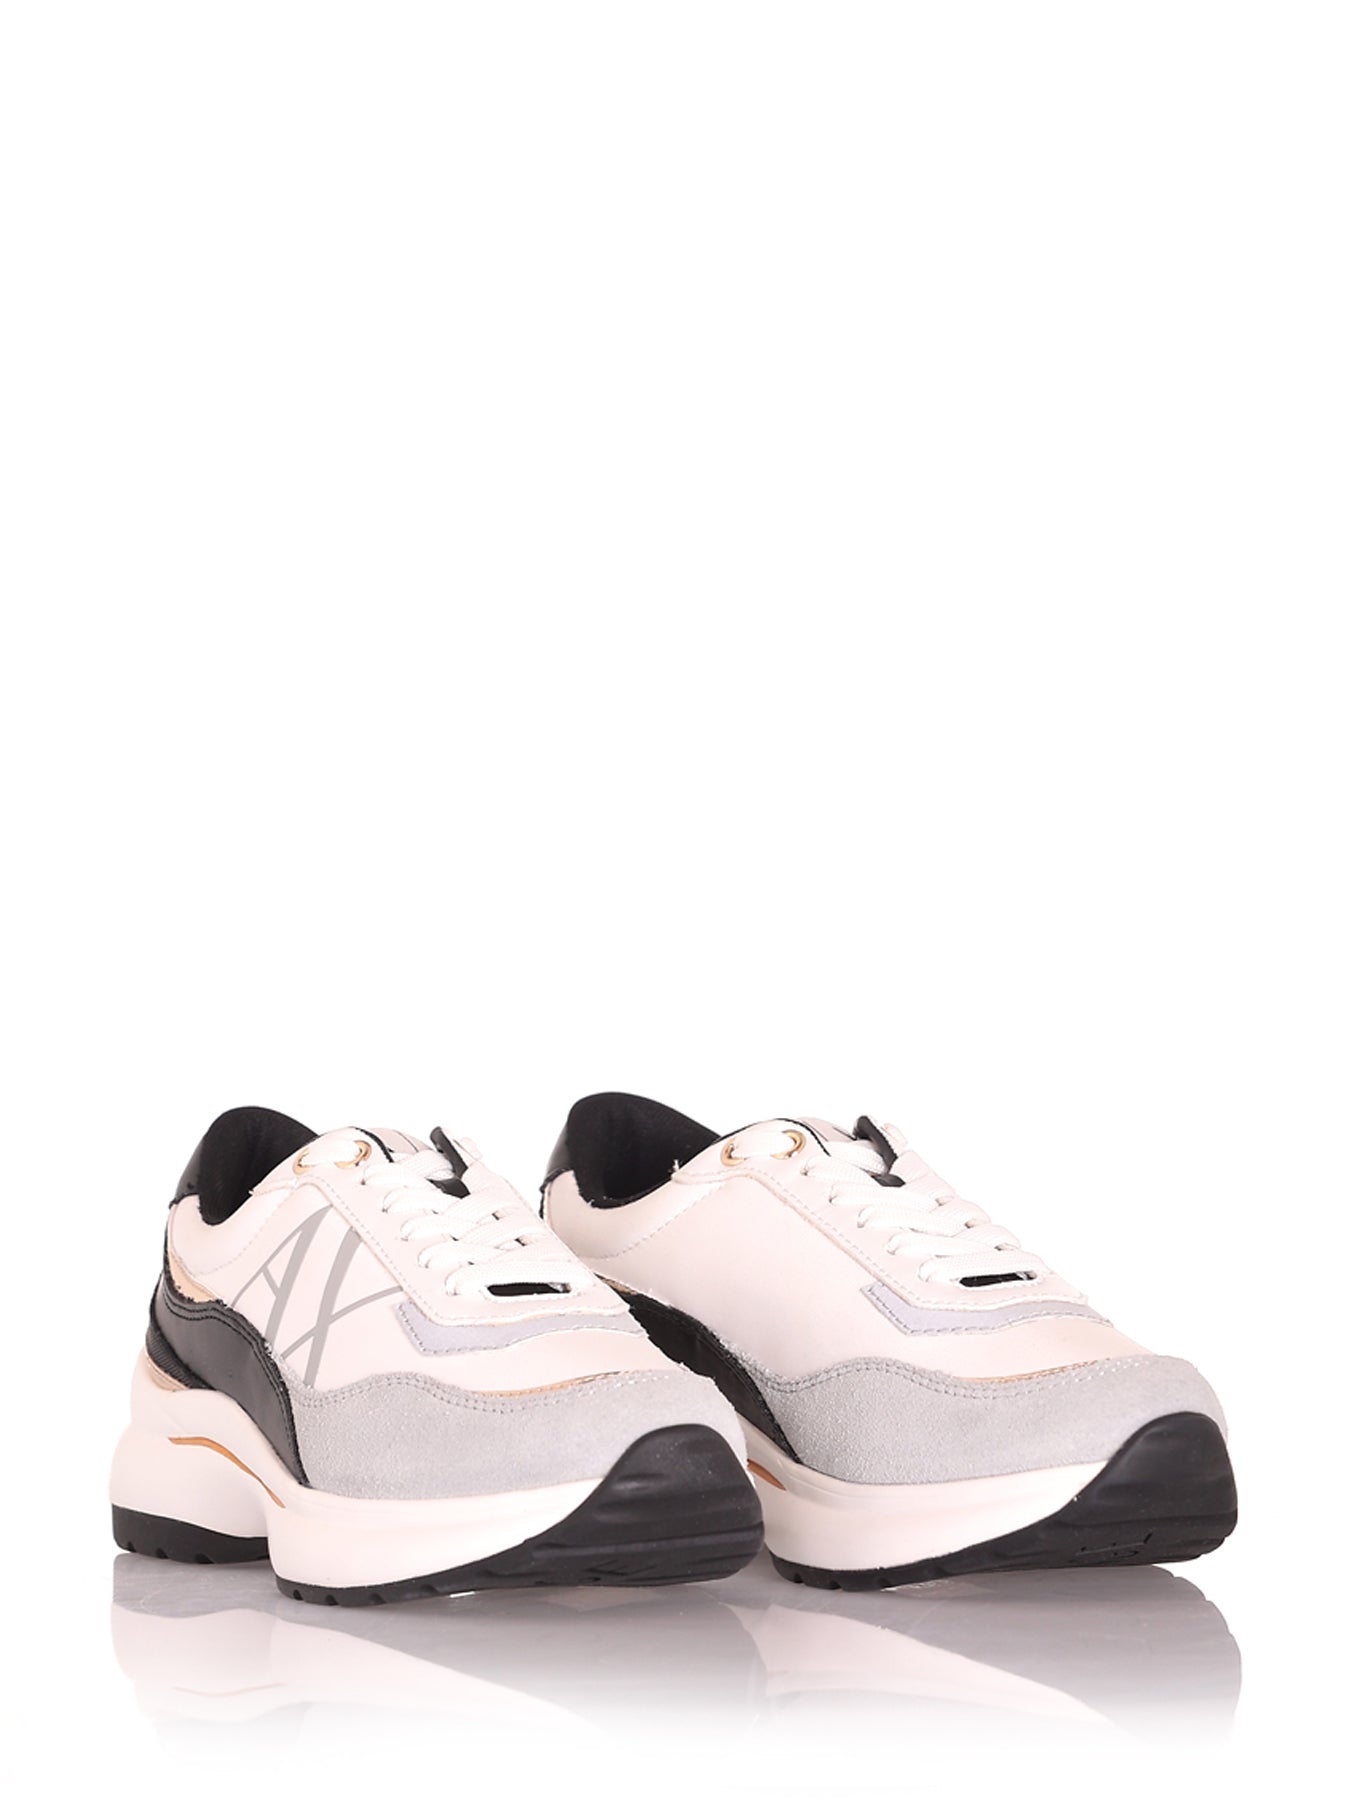 Sneakers Xdx100 Optic WhitE-Grey